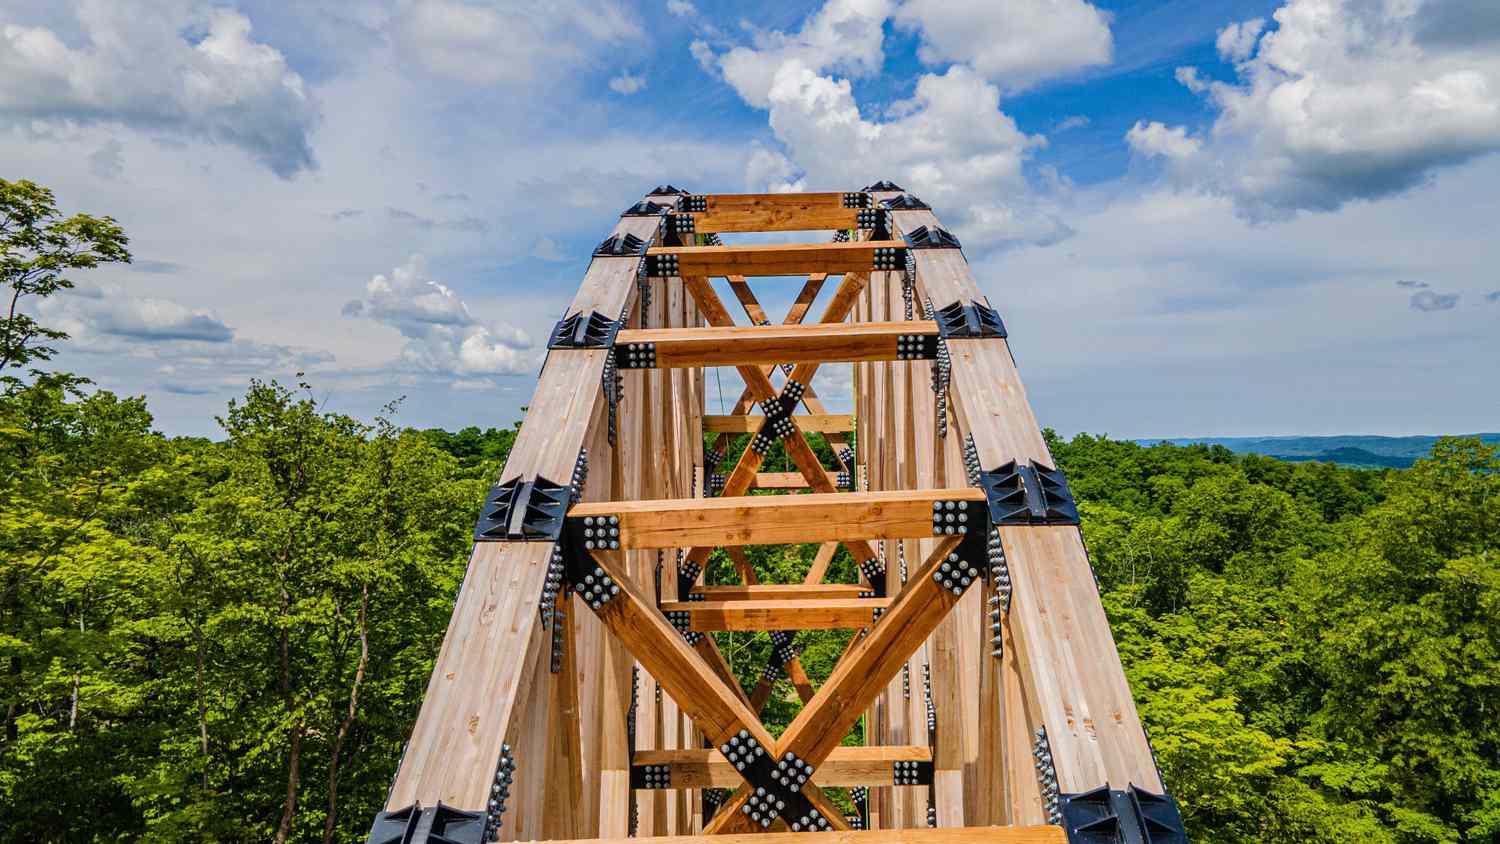 Top timber bridge view of SkyBridge Michigan